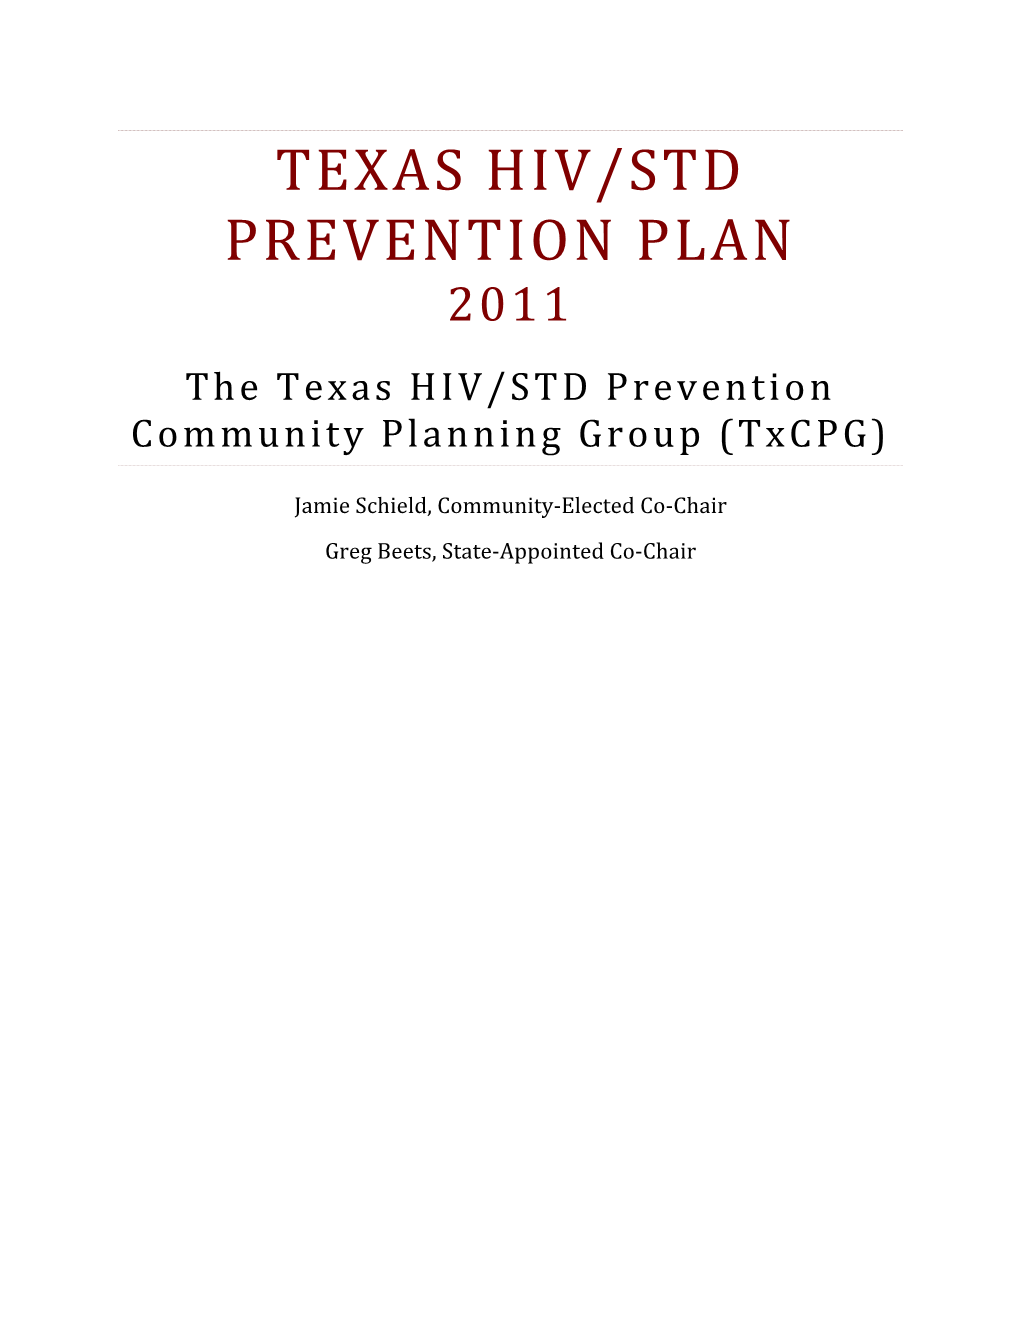 The 2011 Texas HIV/STD Prevention Plan